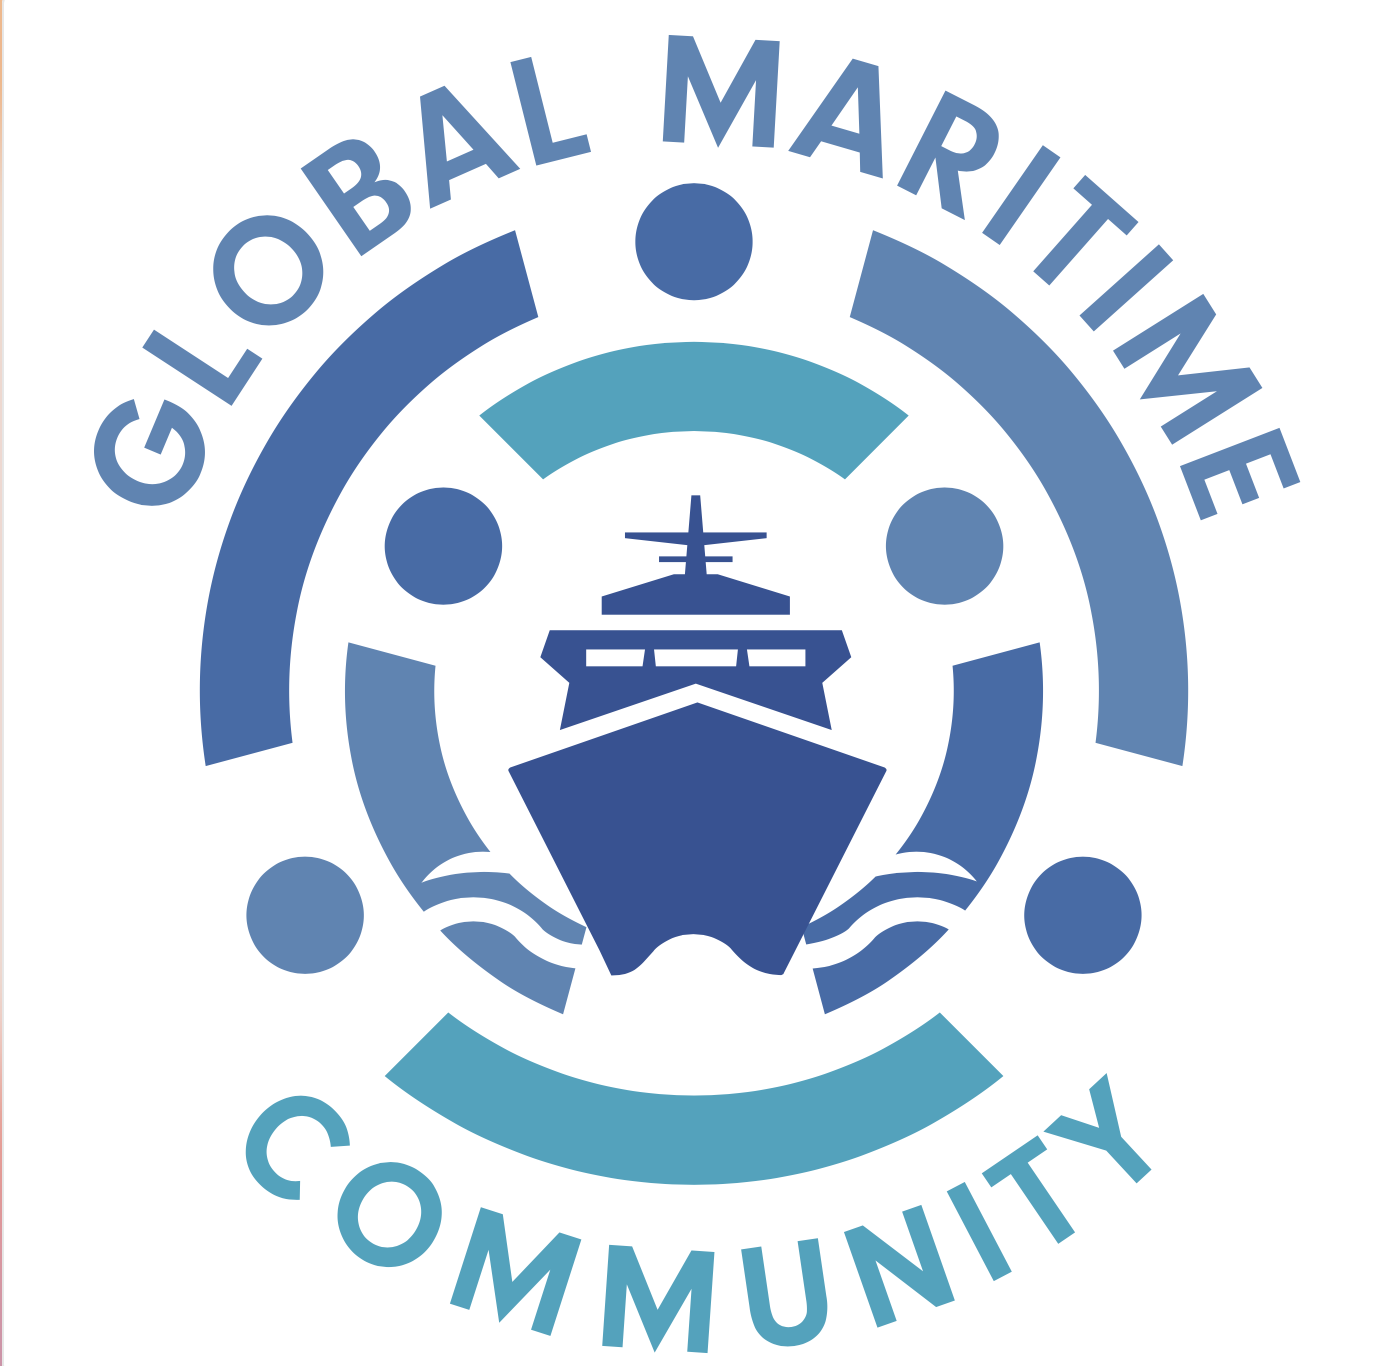 Federation of Global Maritime Community 